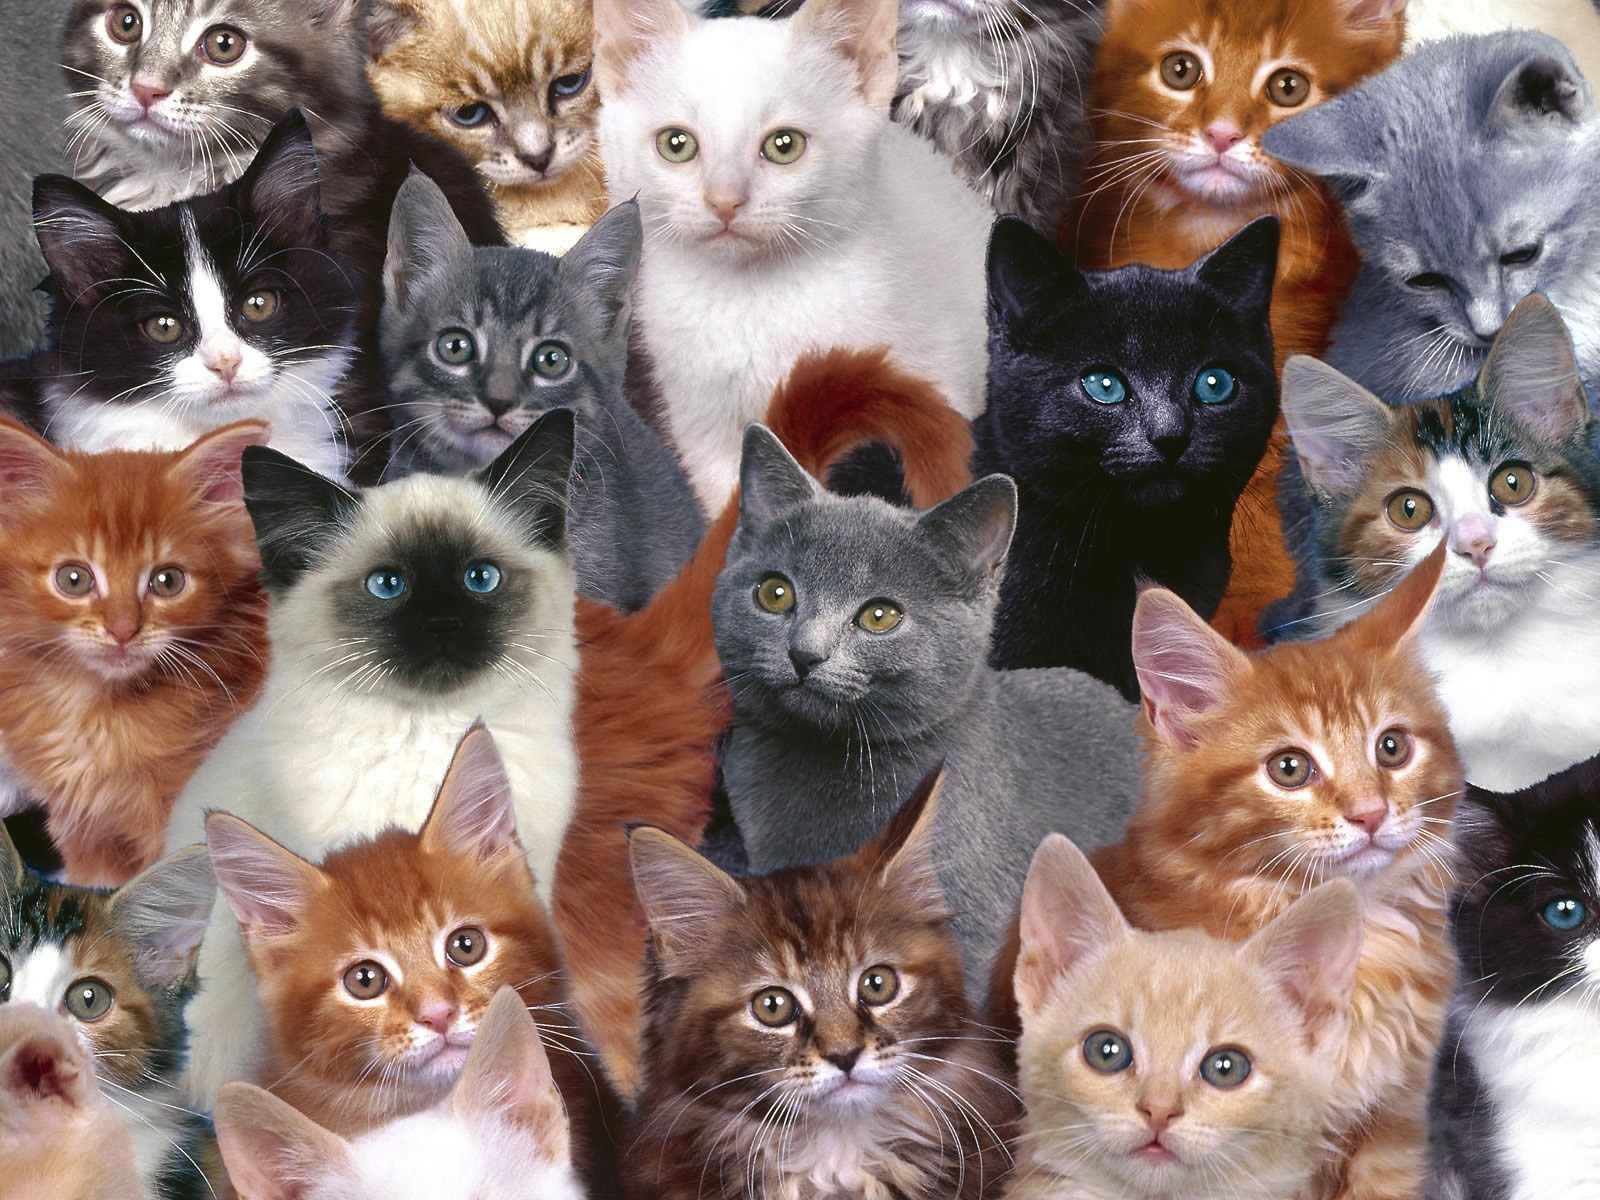 The Coolest Craziest Kitty Cat Desktop Wallpaper On Inter No